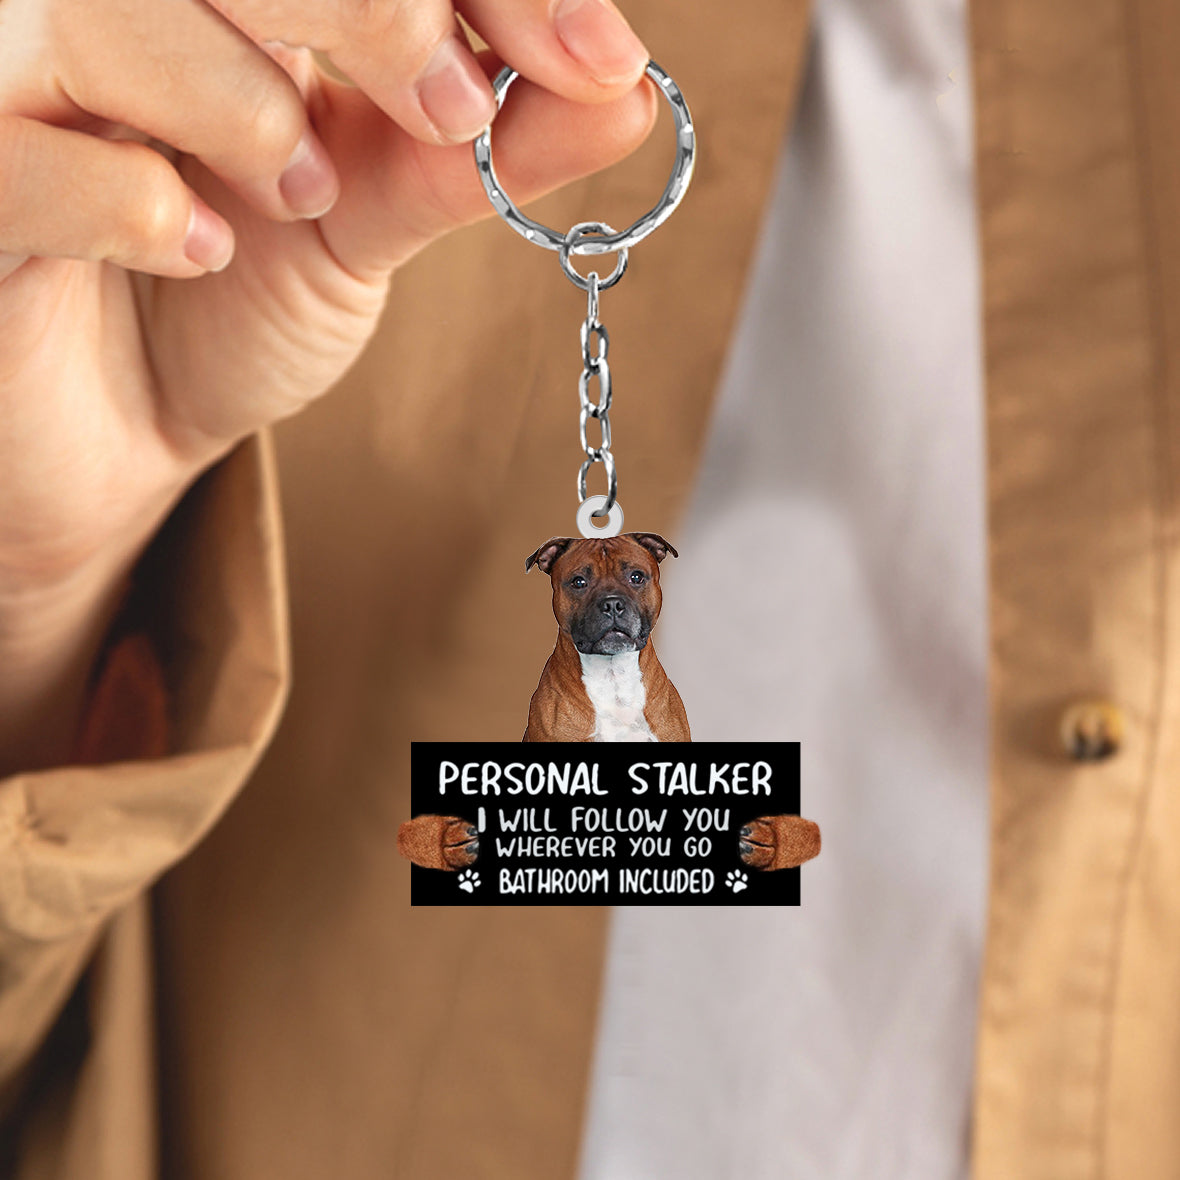 Staffordshire Bull Terrier 02 Personal Stalker Acrylic Keychain